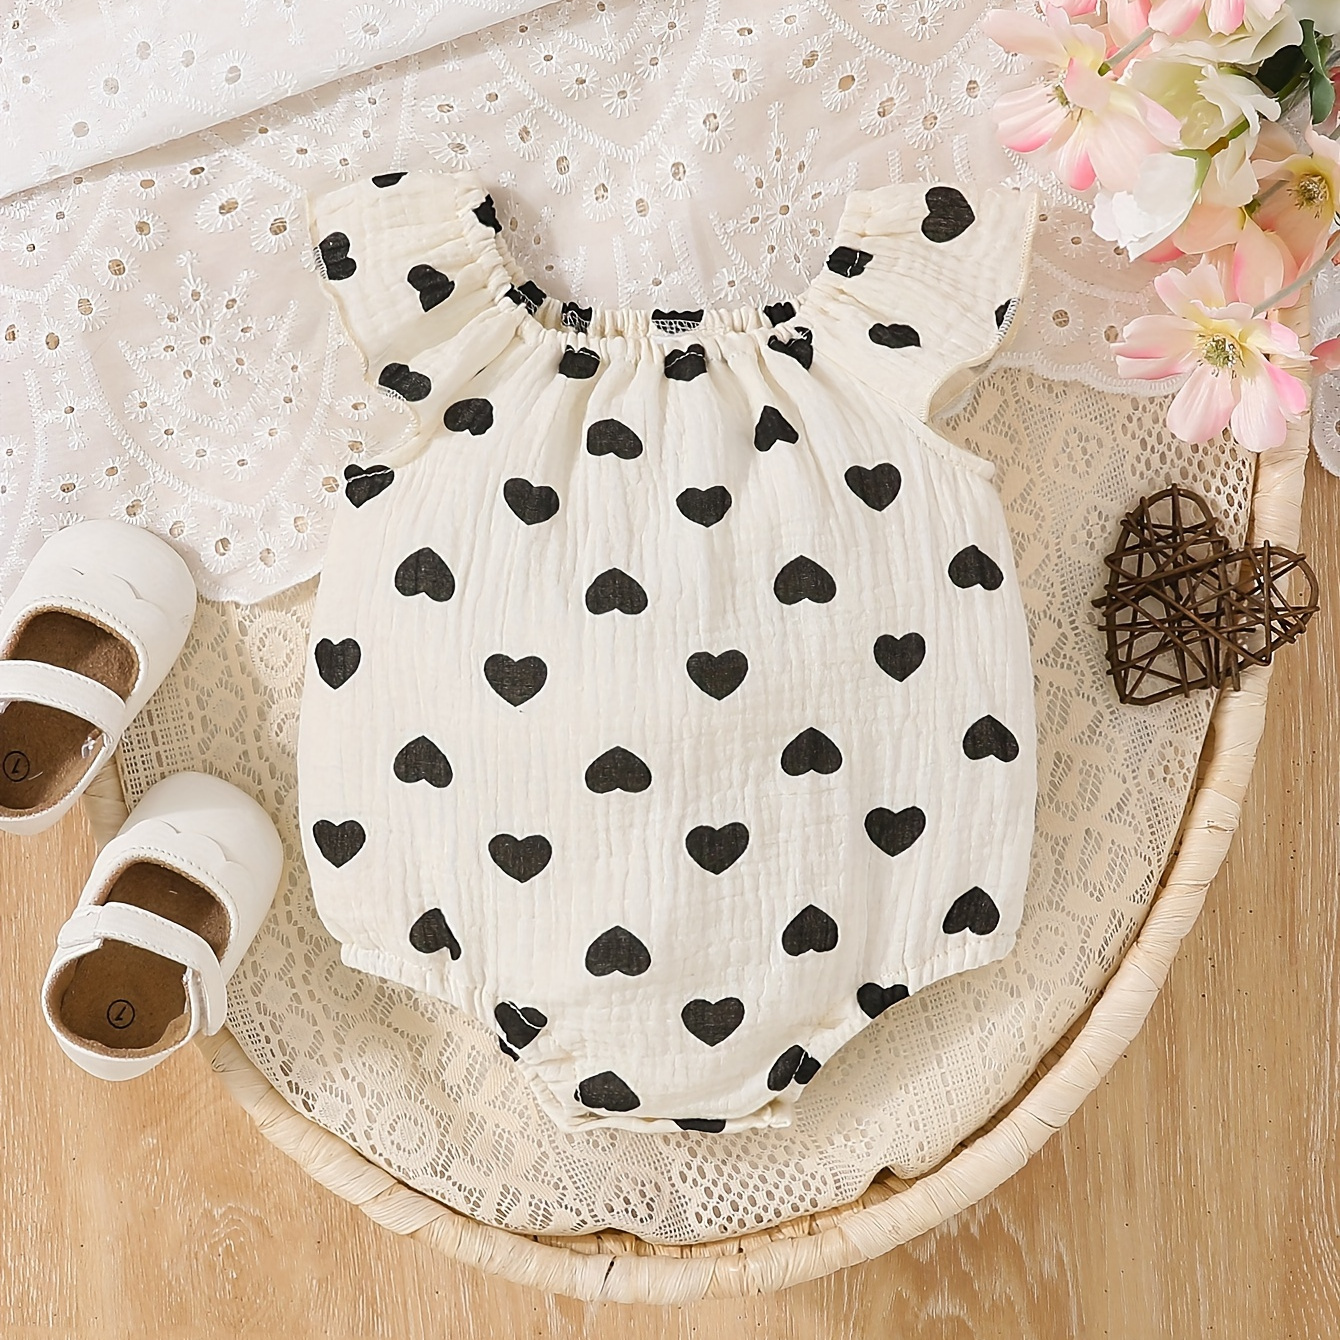 

Baby's Cartoon Heart Full Print Cotton Muslin Bodysuit, Casual Sleeveless Triangle Onesie, Toddler & Infant Girl's Clothing For Summer